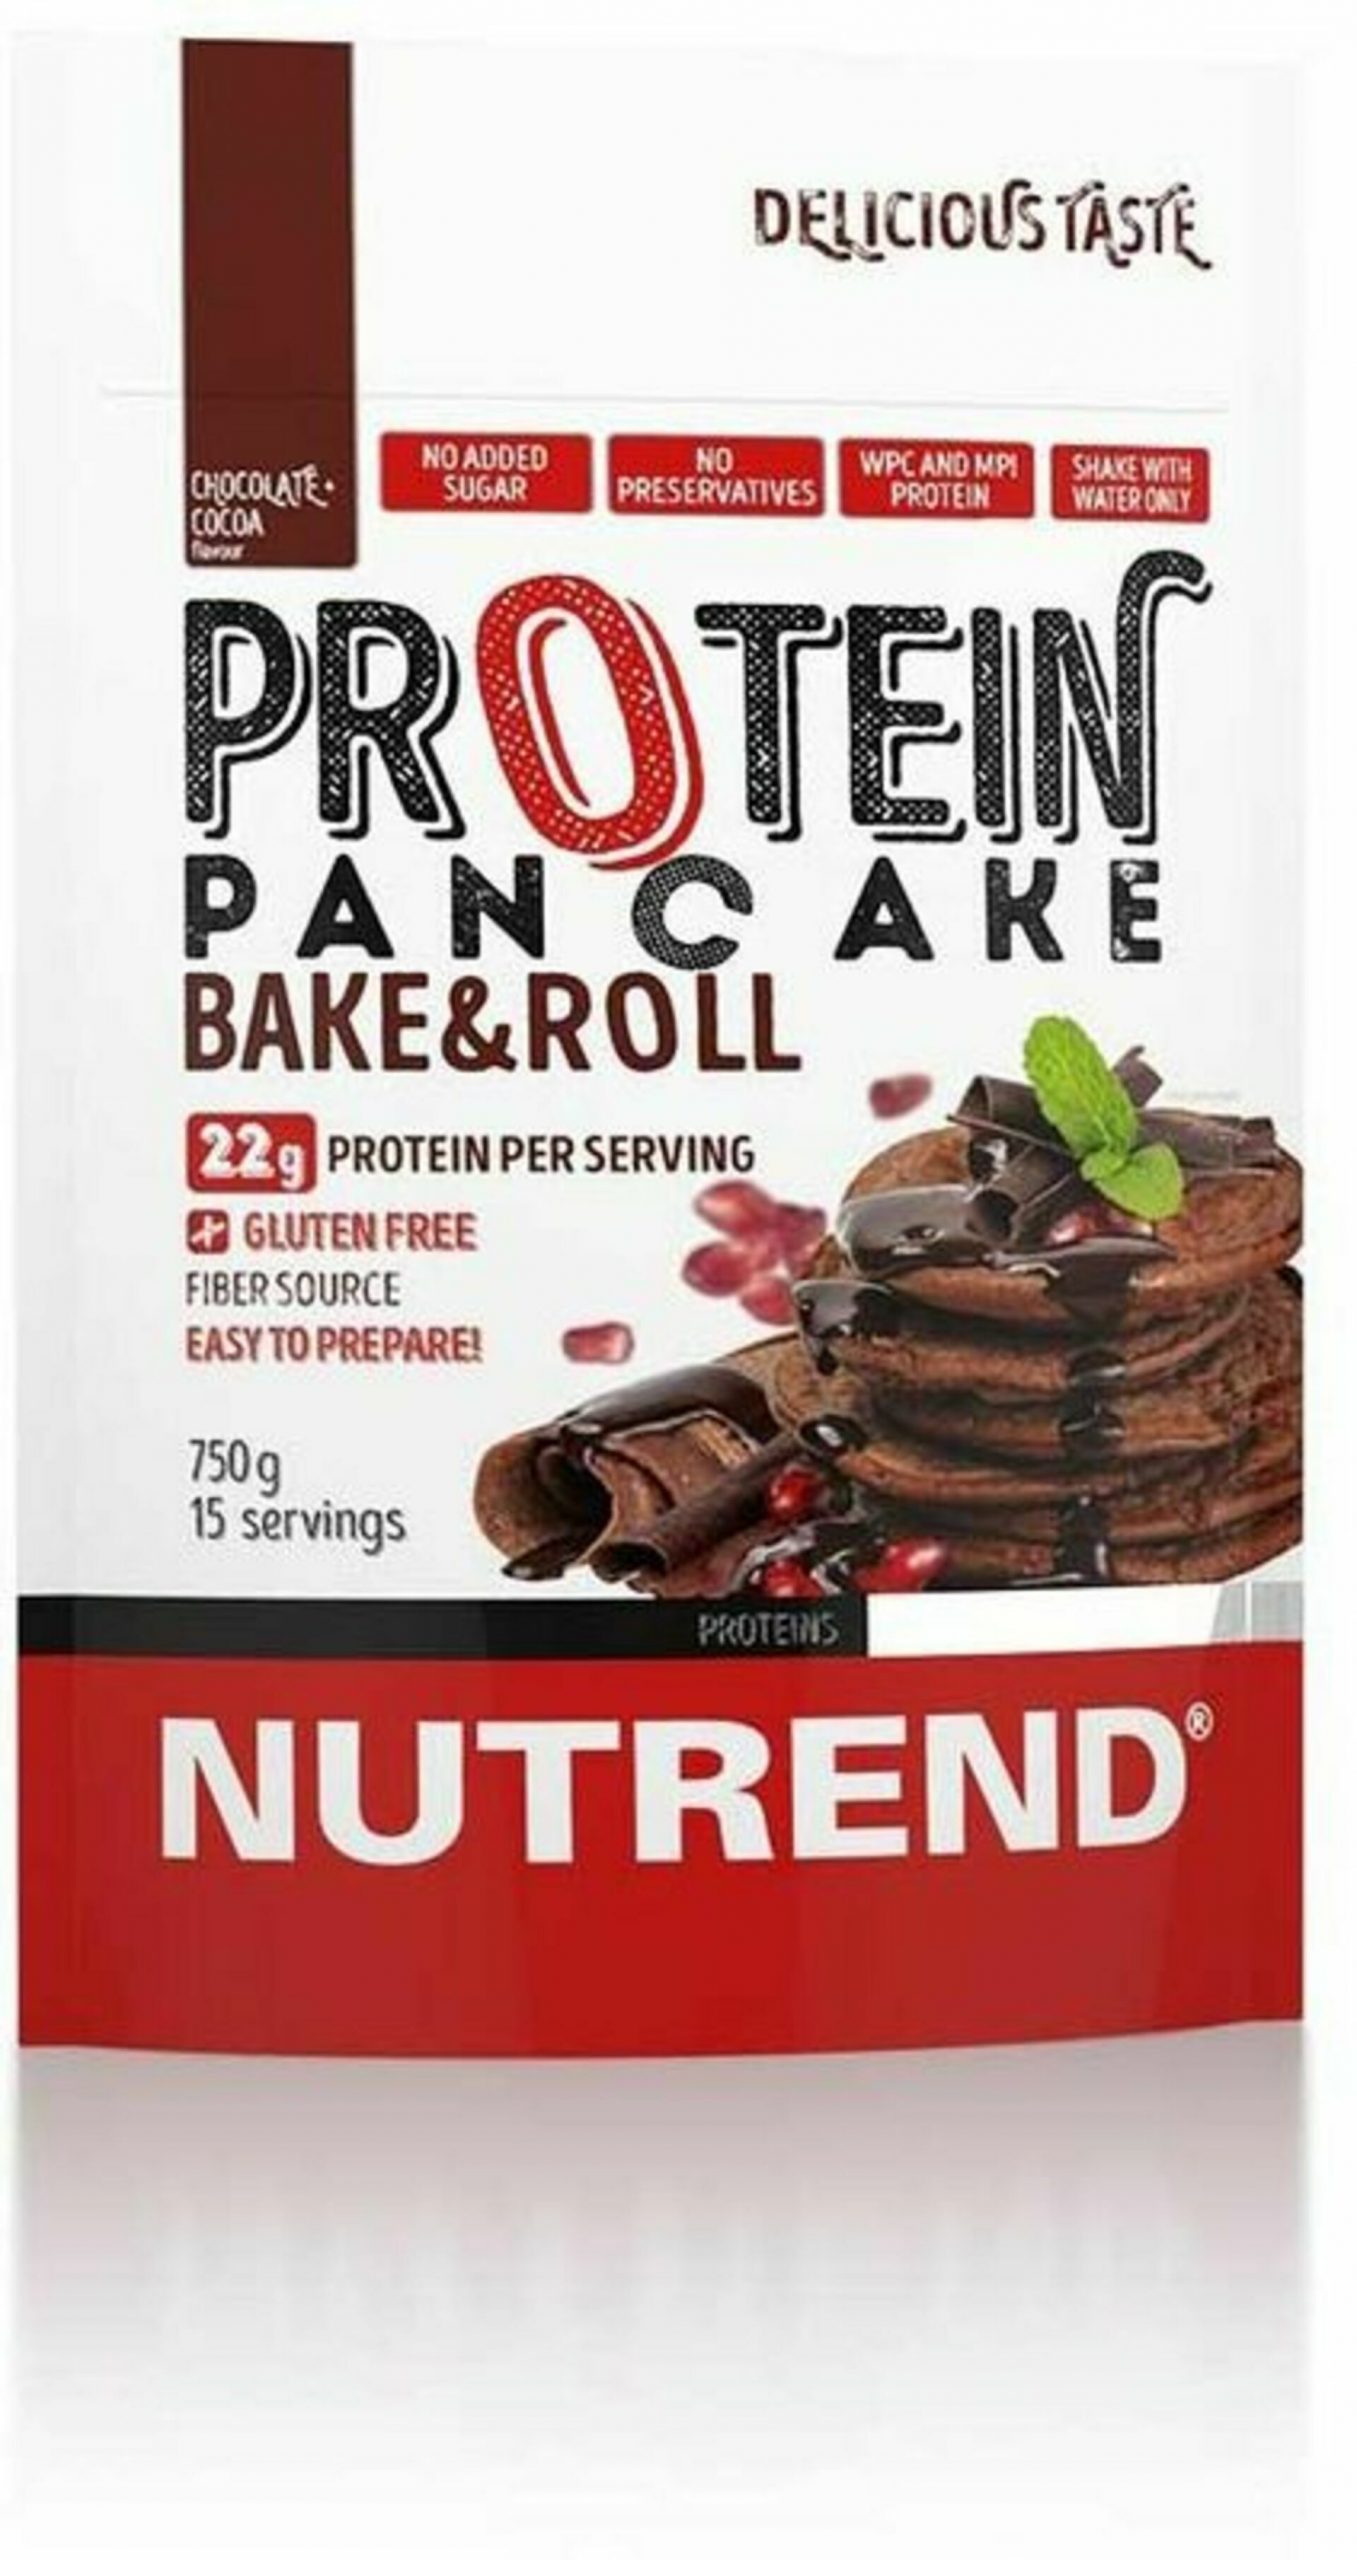 Nutrend Protein pancake 50 g - kakao expirace